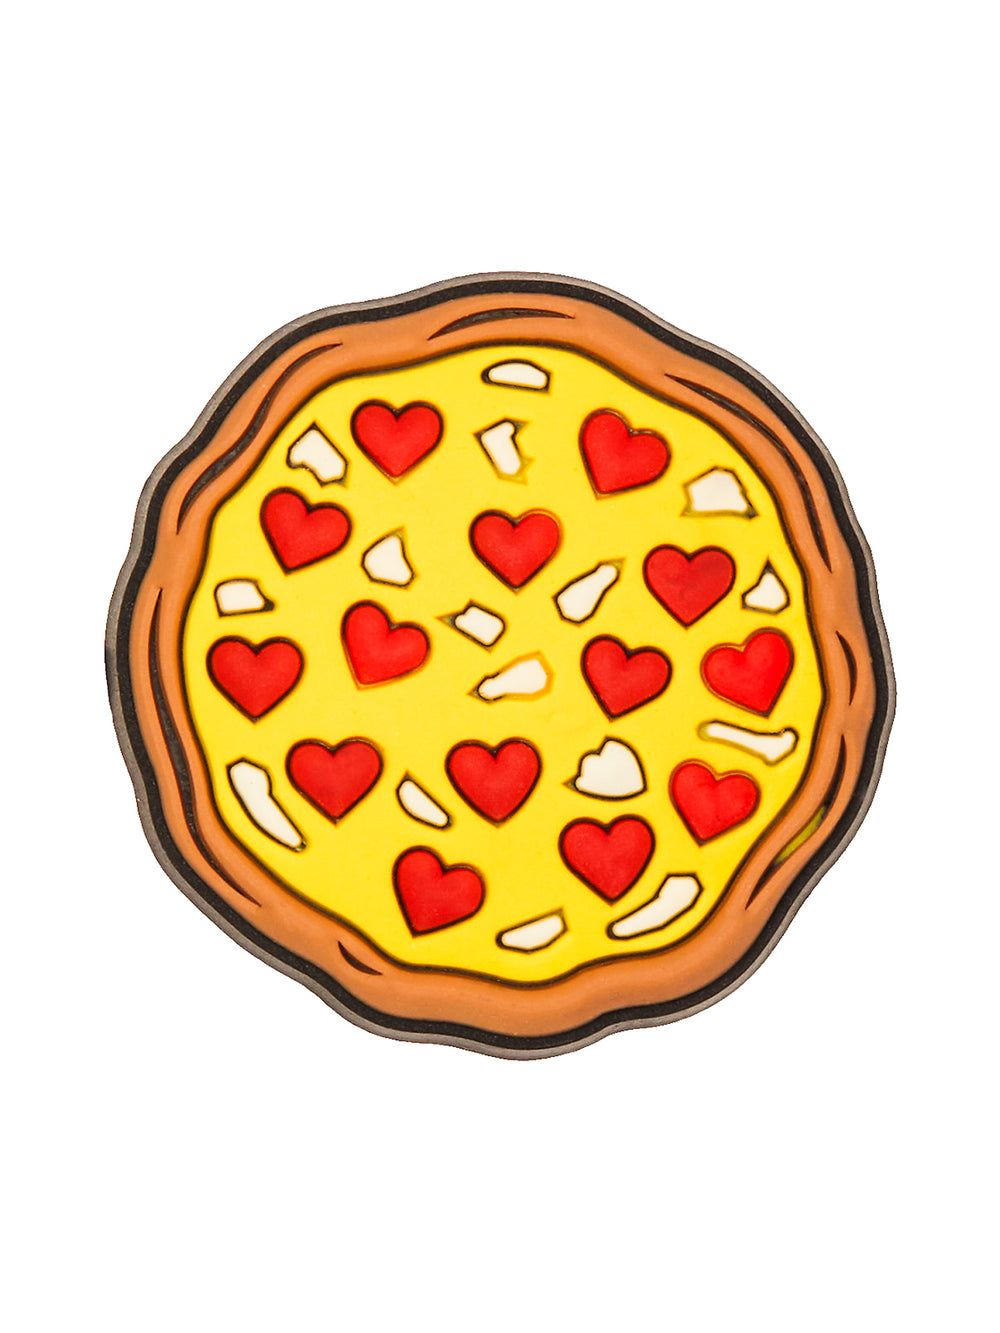 CROCS JIBBITZ LOVE PIZZA - CLEARANCE